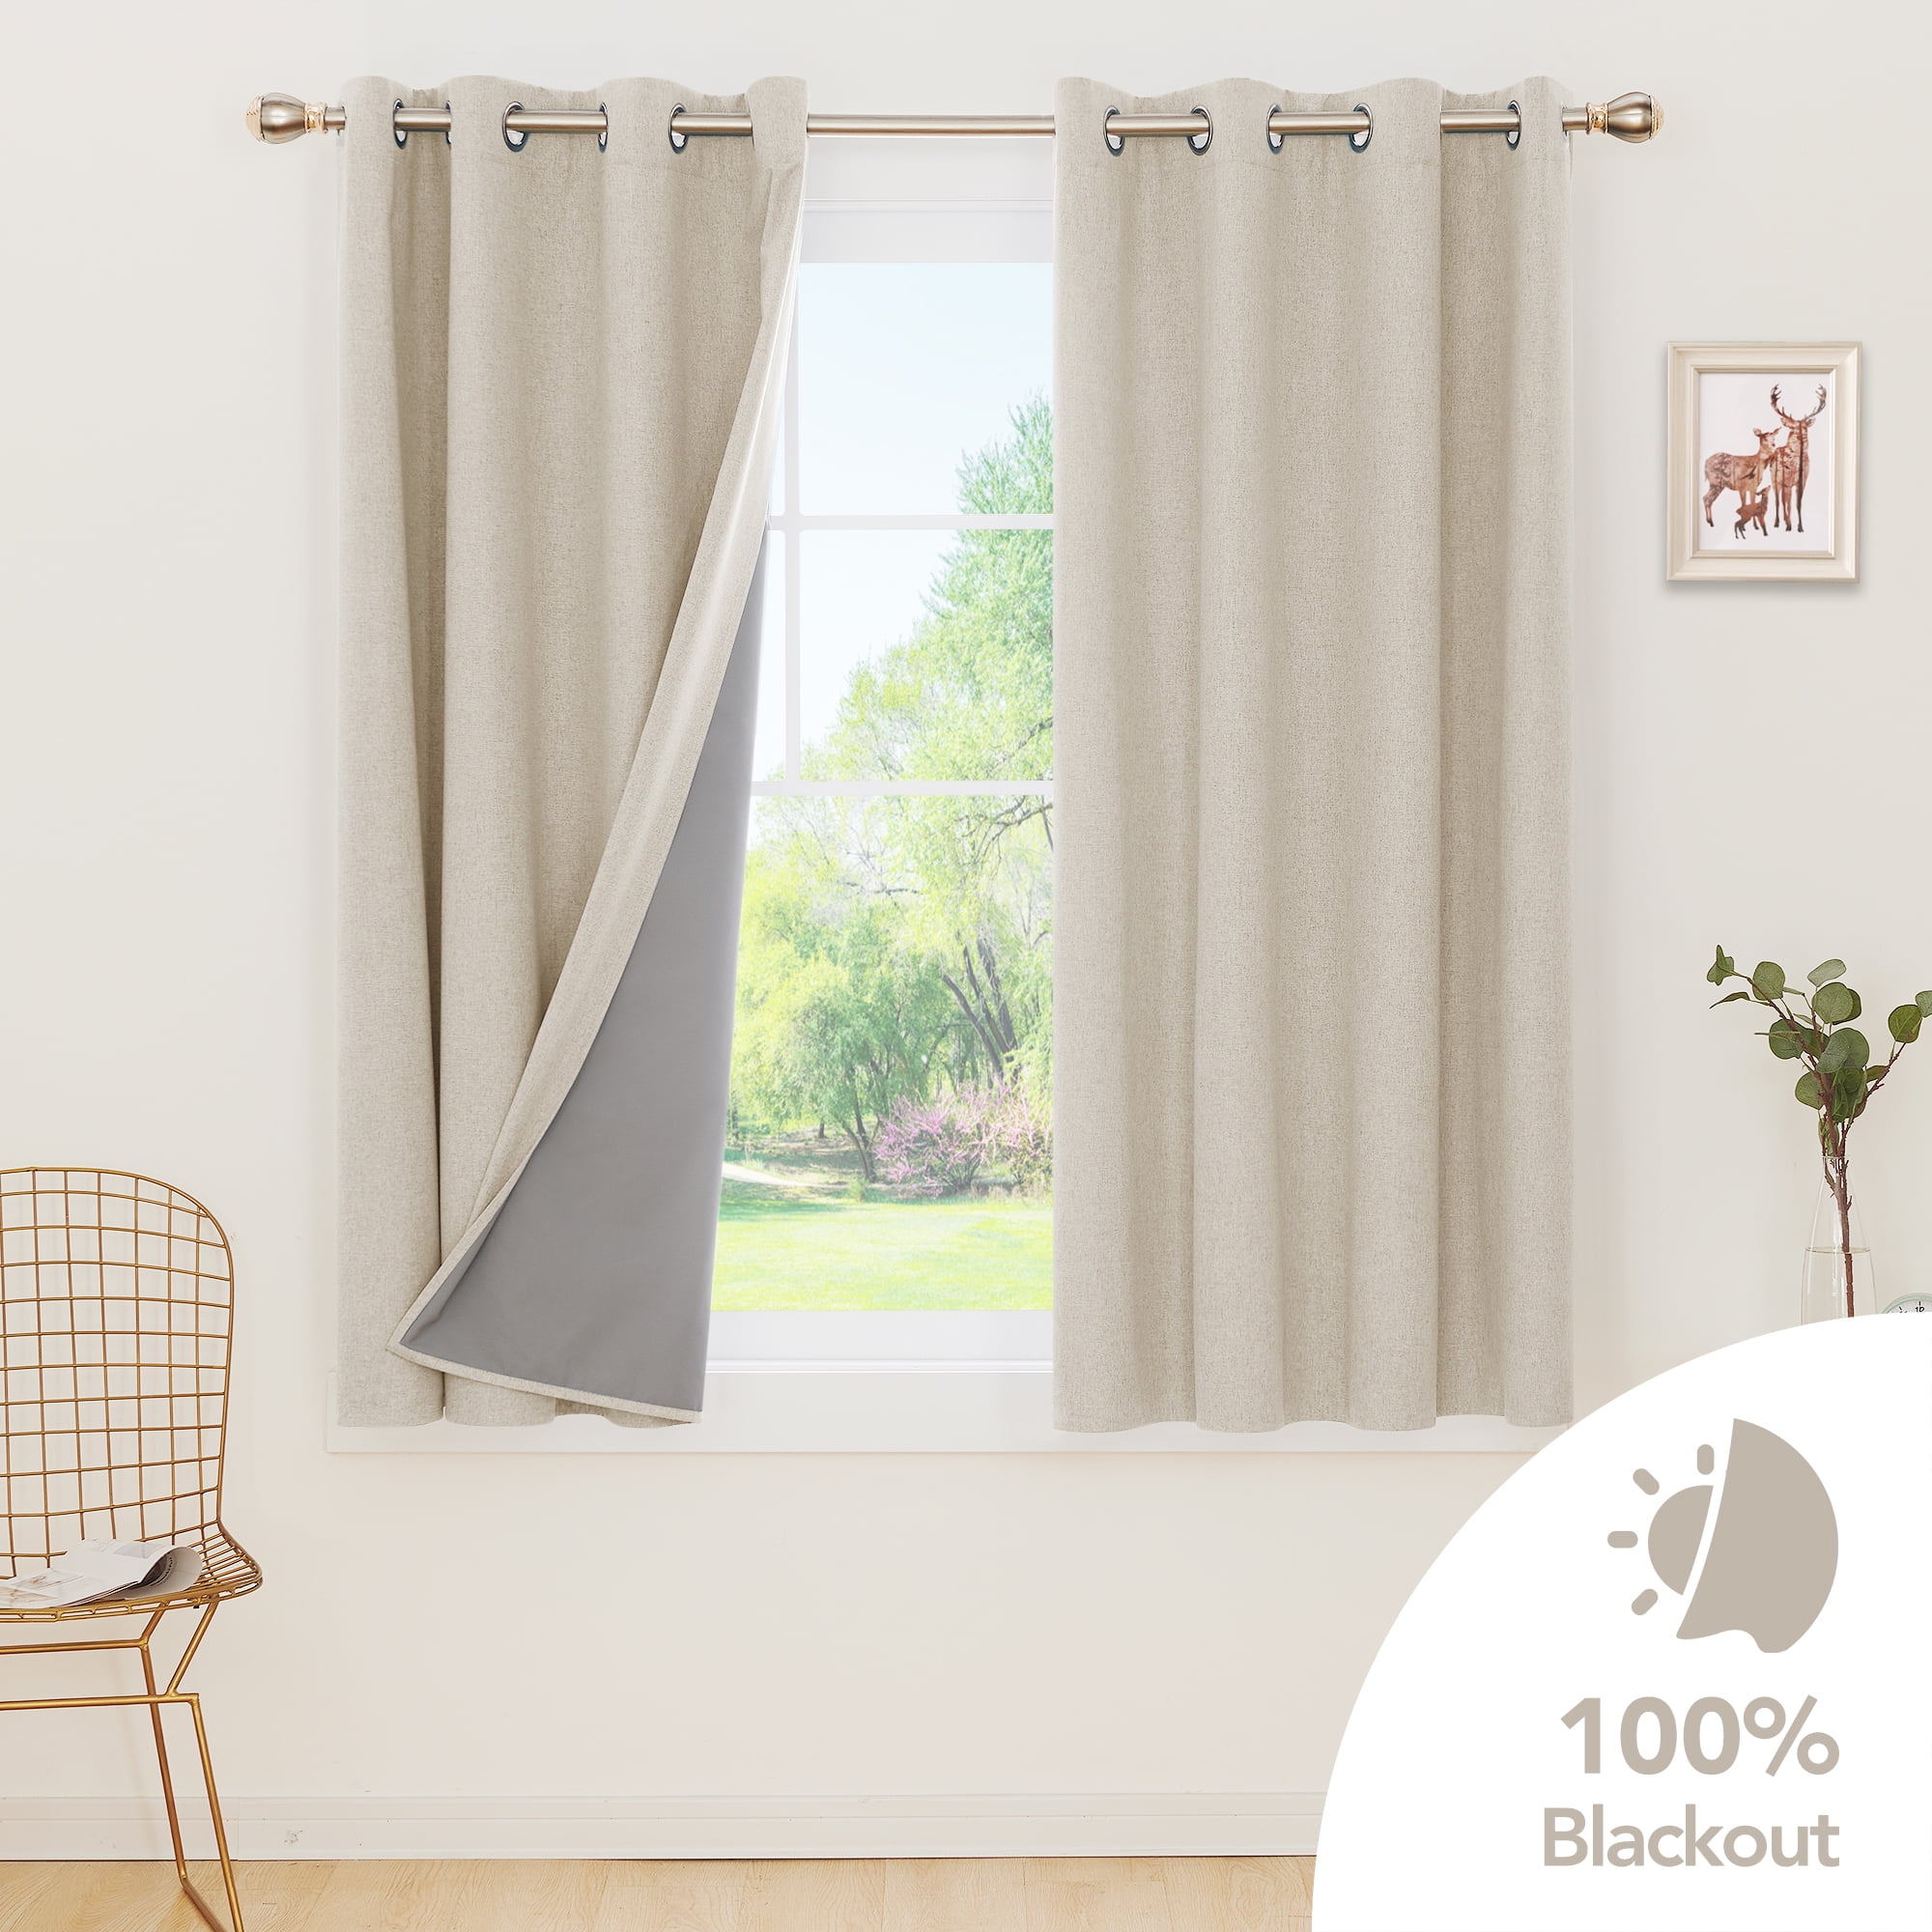 cortina corta dormitorio  Curtains living room, Window treatments bedroom,  Short window curtains